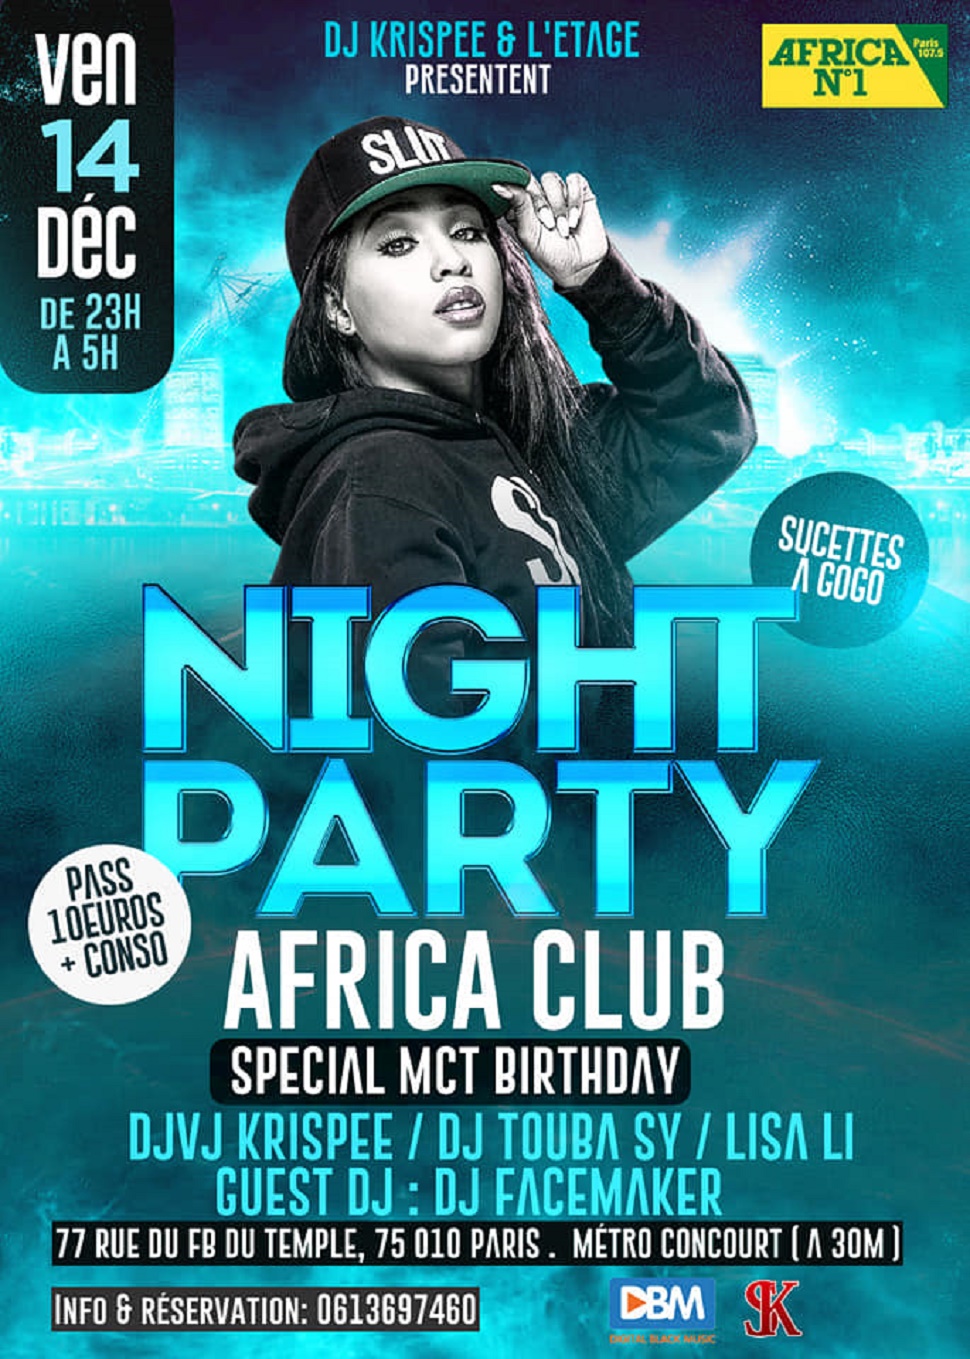 LA NIGHT PARTY AFRICA CLUB